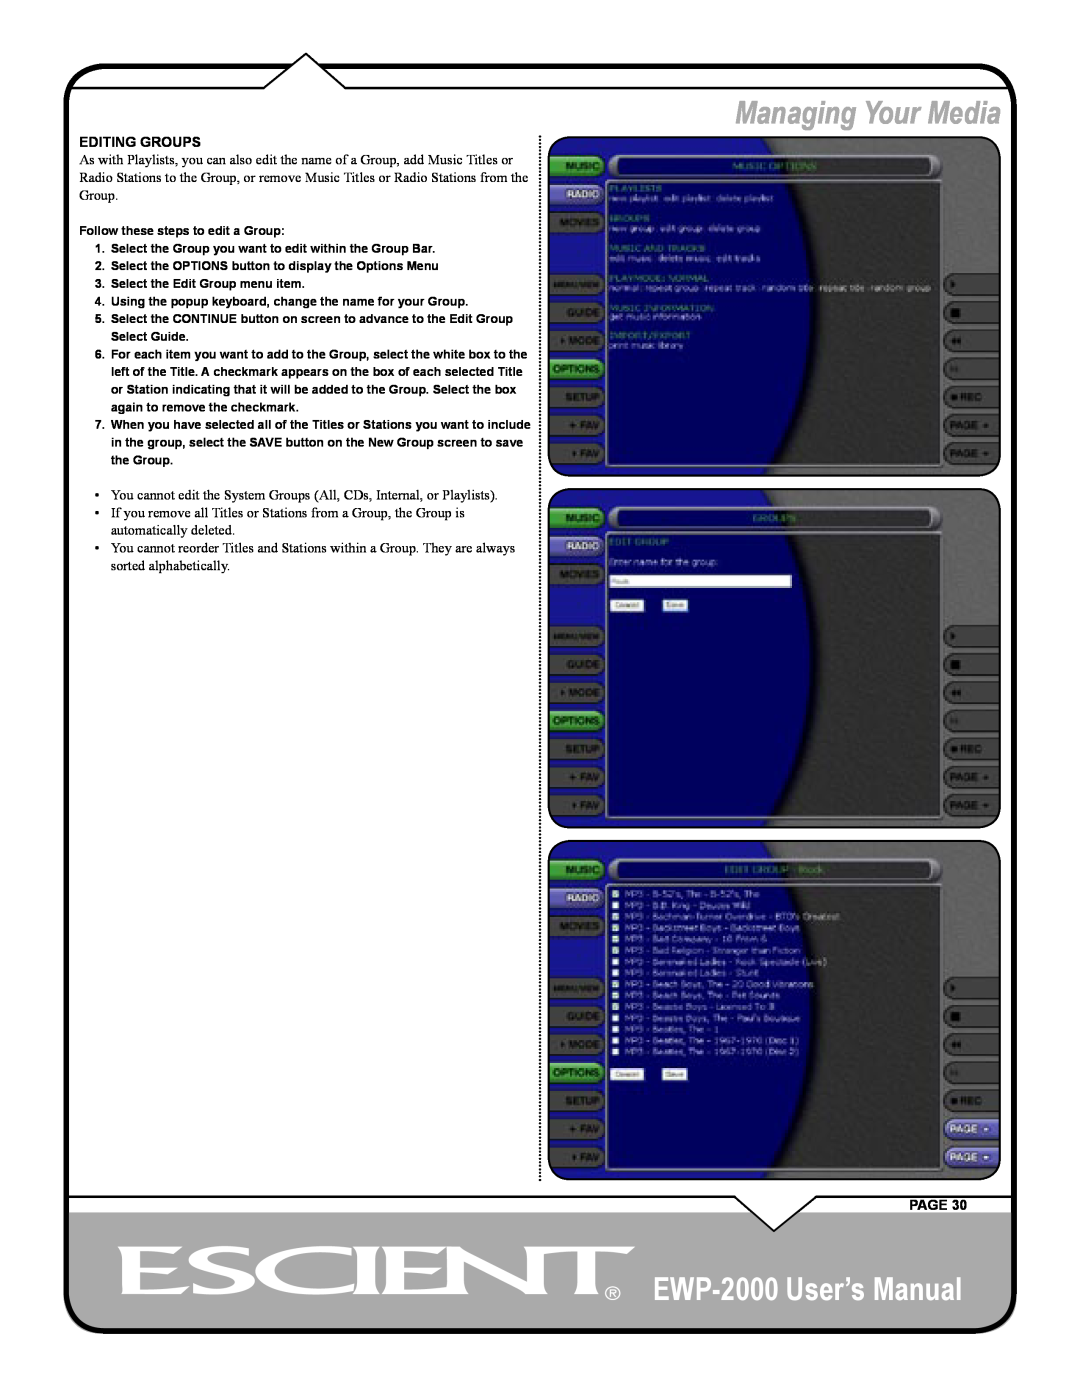 Escient user manual Managing Your Media, EWP-2000 User’s Manual, Editing Groups, Page 